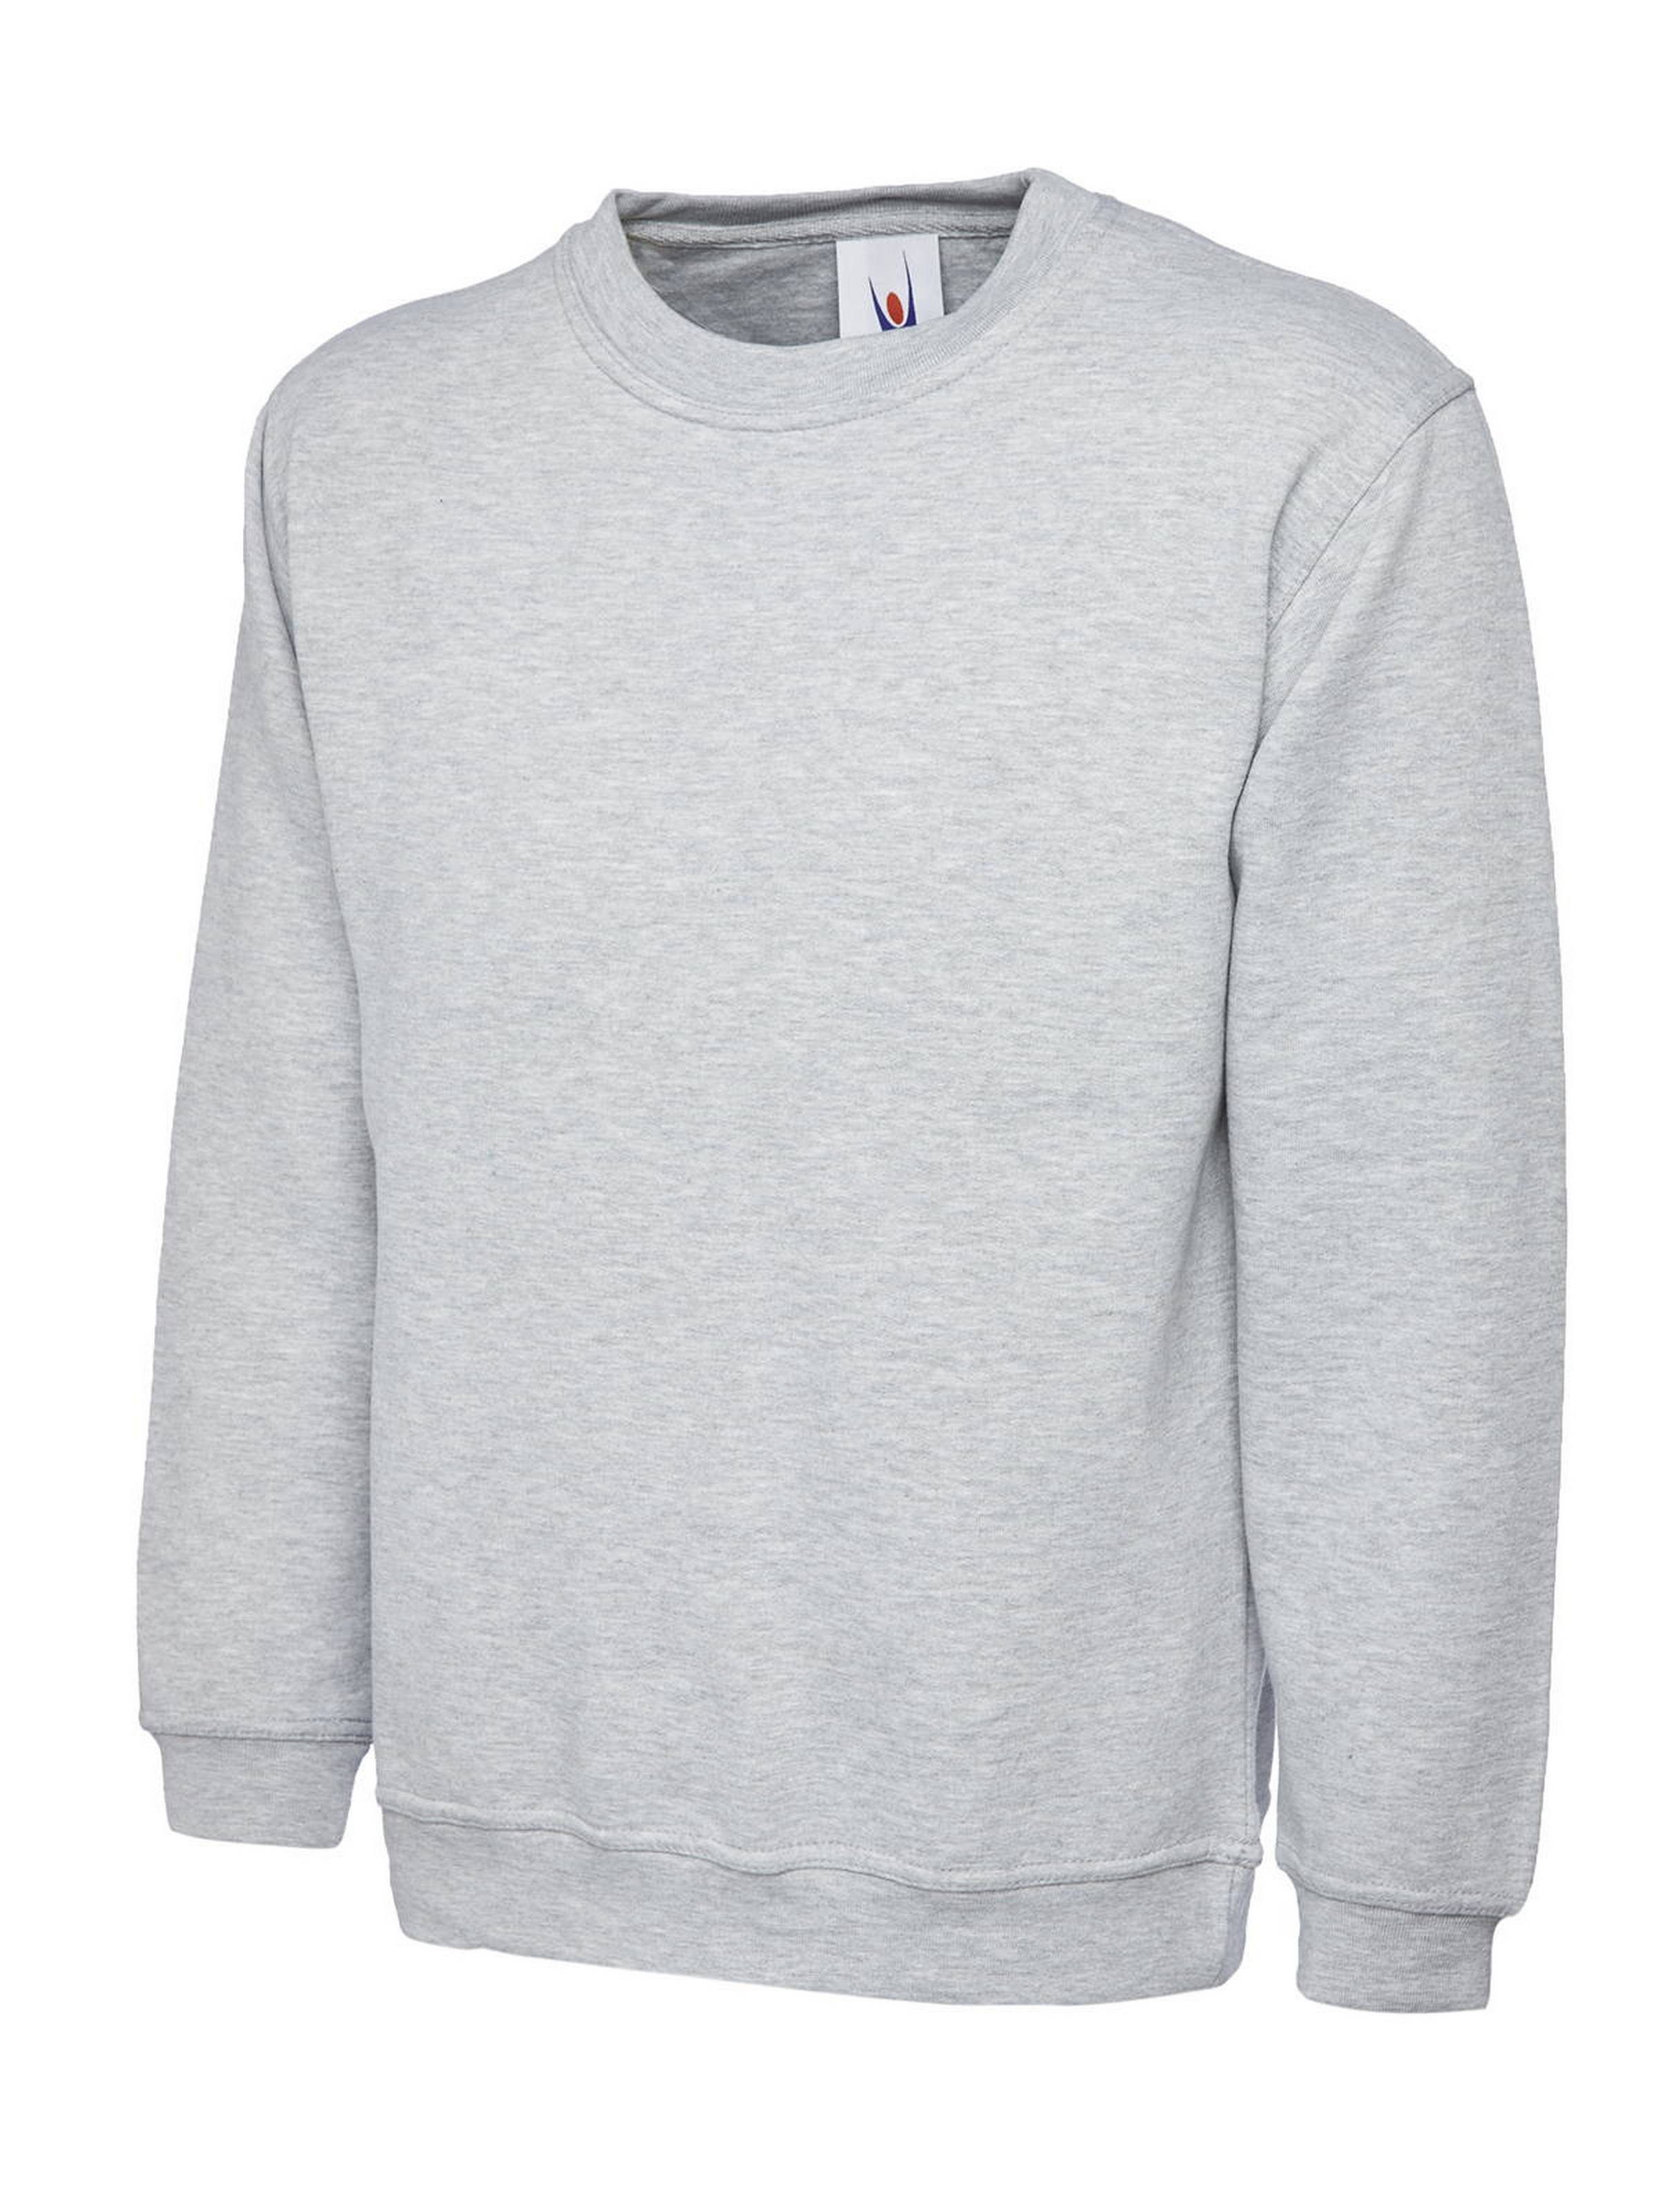 Uneek Premium Sweatshirt (UC201) - Logo Studio Workwear